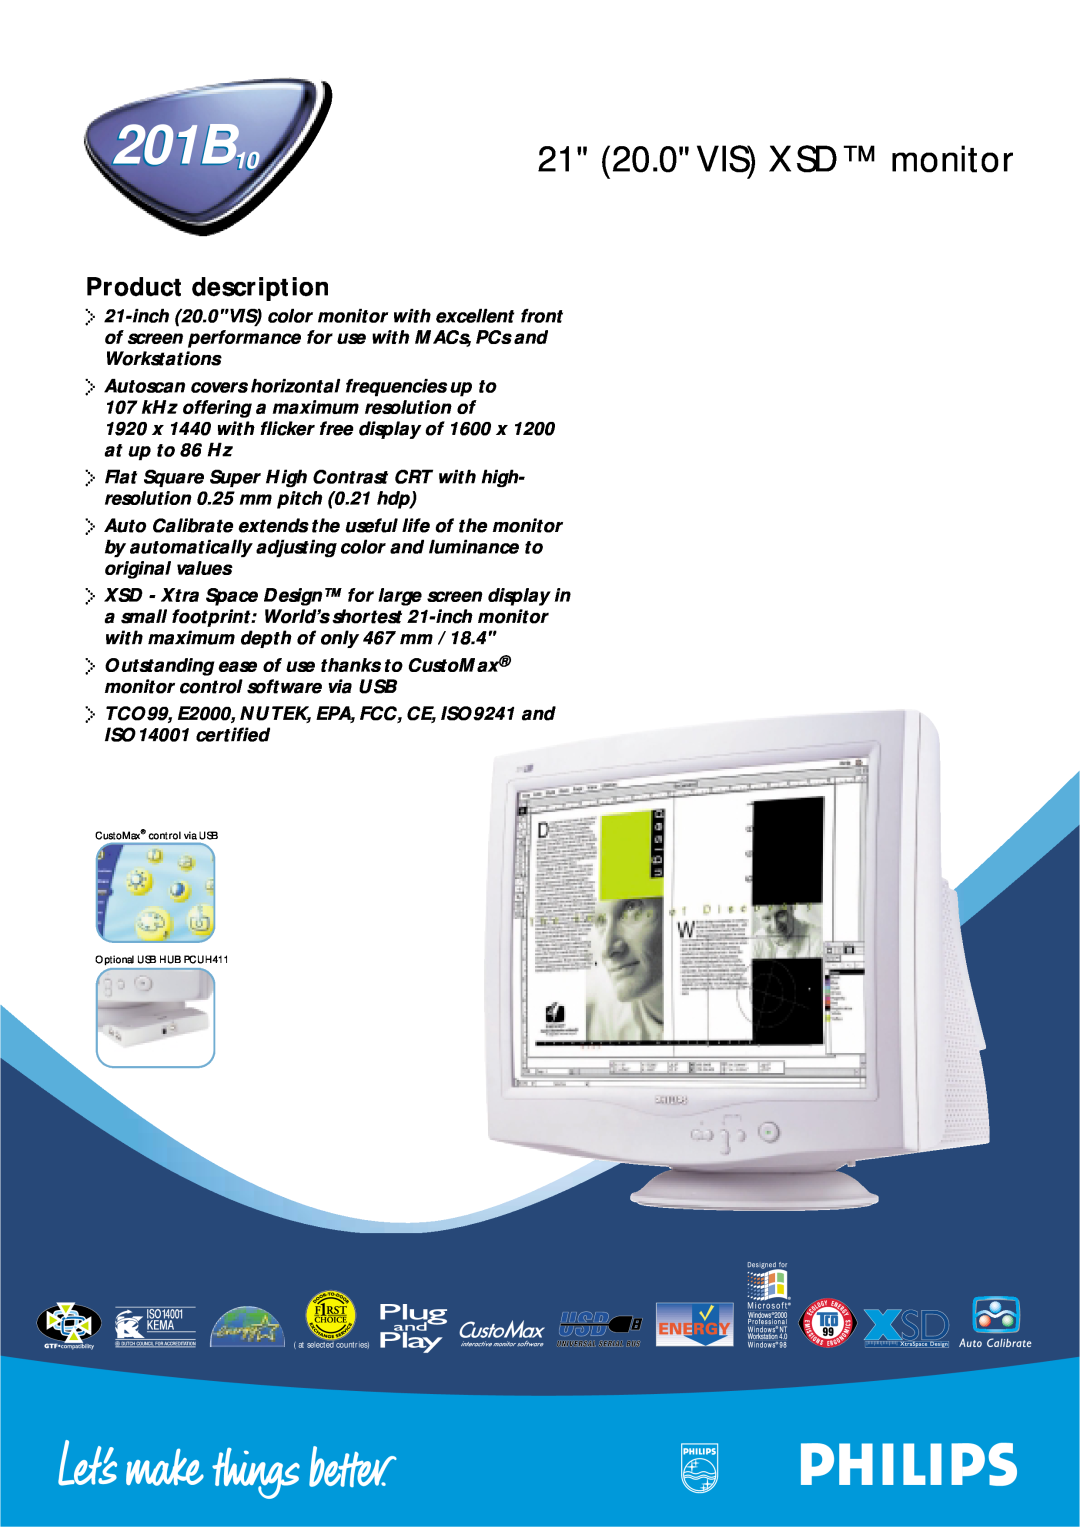 Philips manual 201B1021 20.0 VIS XSD monitor, Product description 